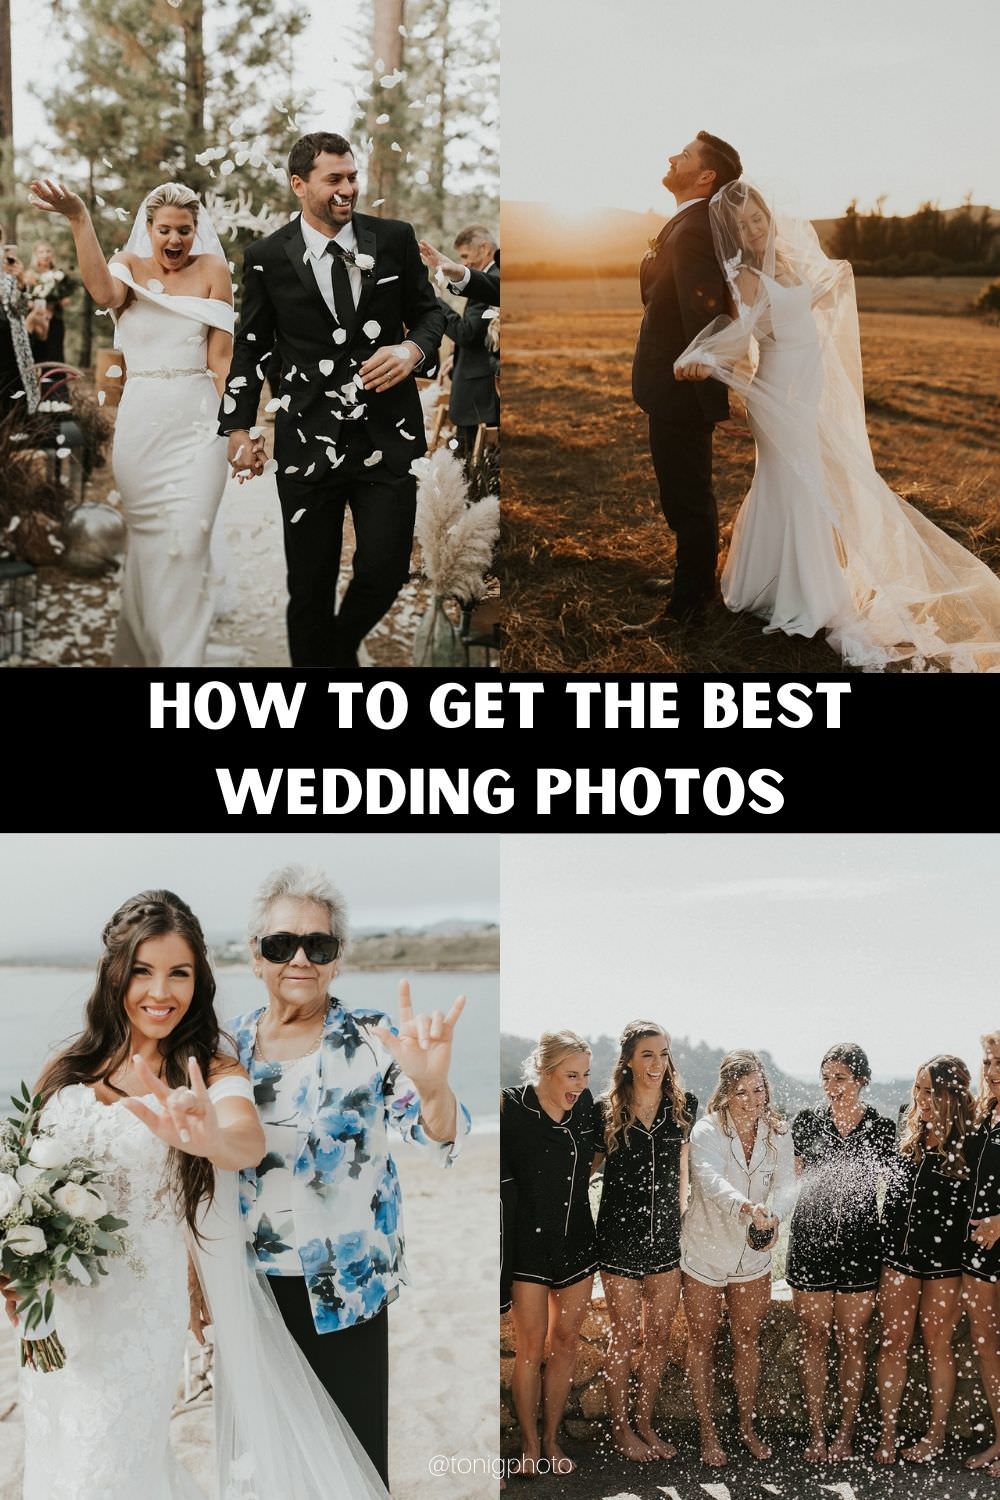 https://tonigphoto.com/wp-content/uploads/sites/12447/2021/01/HOW-TO-GET-THE-BEST-WEDDING-PHOTOS-BY-TONIGPHOTO.jpg